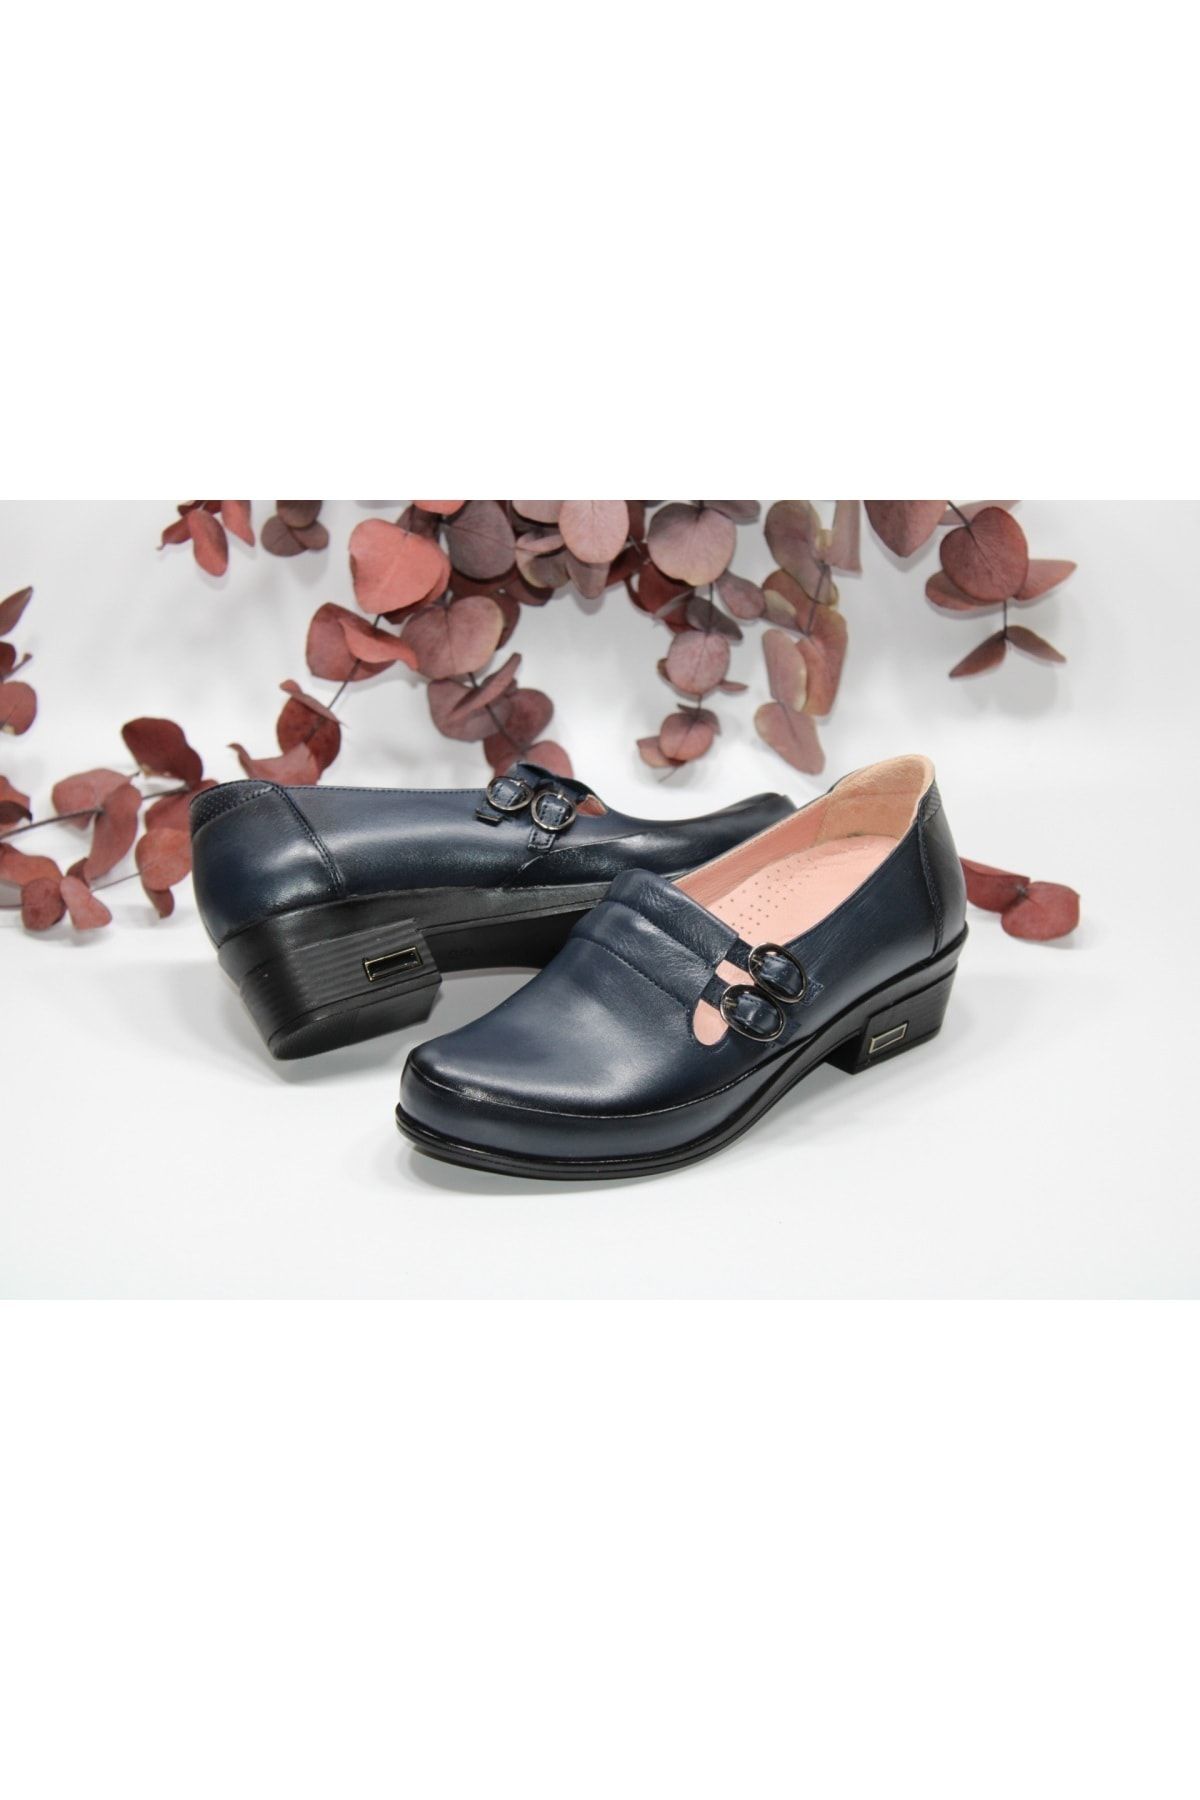 MARY JANE Maryjane Hakikideri Kısa Topuklu Tokalı Lacivert Rahat Günlük Klasik Ayakkabı